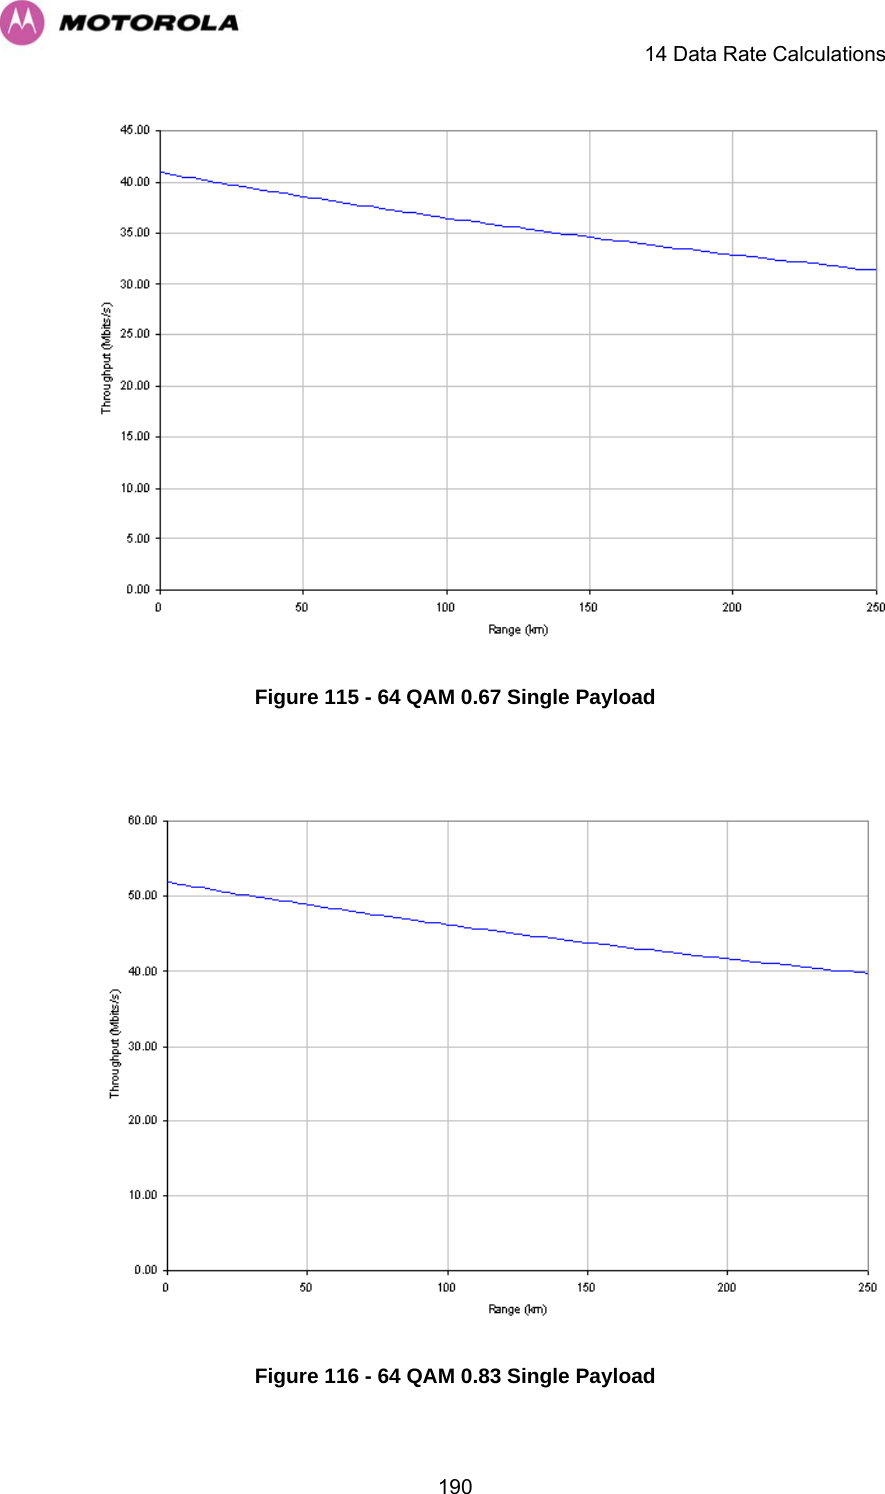     14 Data Rate Calculations  190 Figure 115 - 64 QAM 0.67 Single Payload   Figure 116 - 64 QAM 0.83 Single Payload 